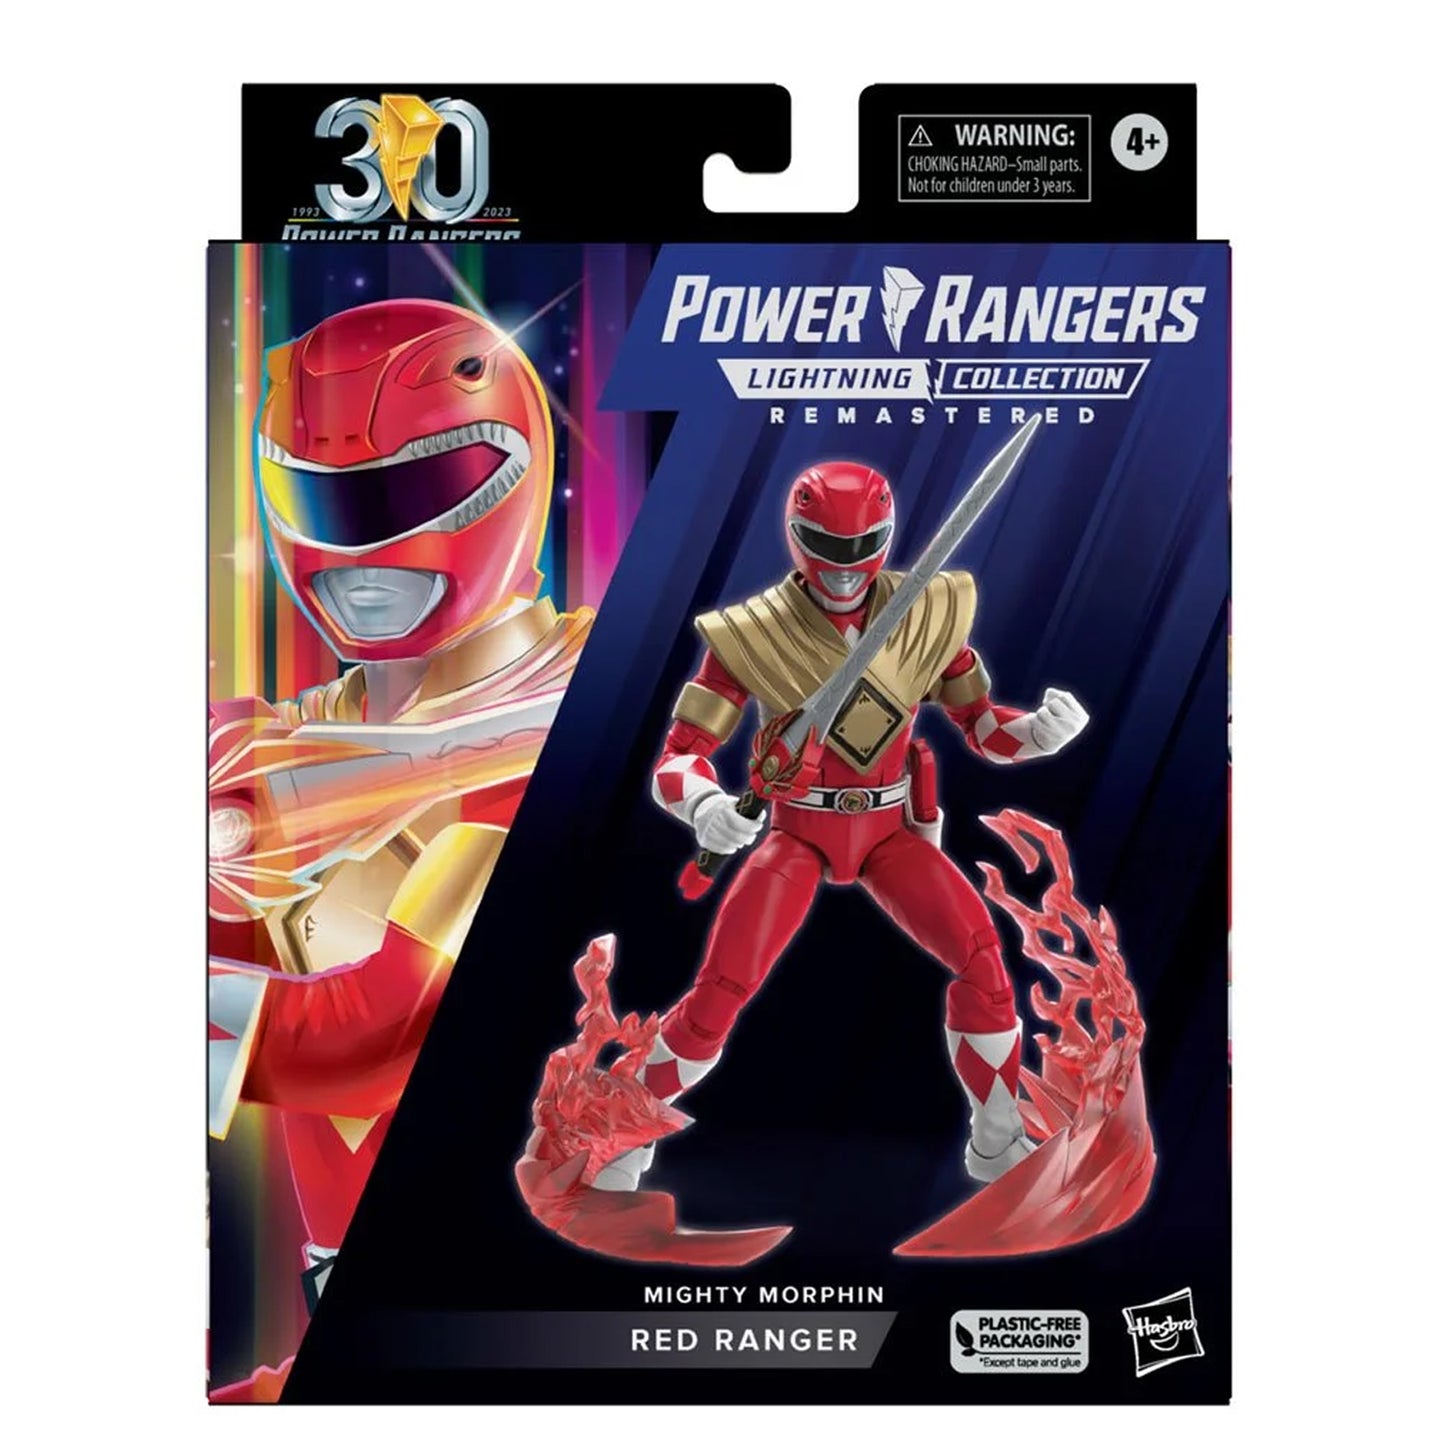 Power Rangers Lighting Collection REMASTERED Morphin Red Ranger